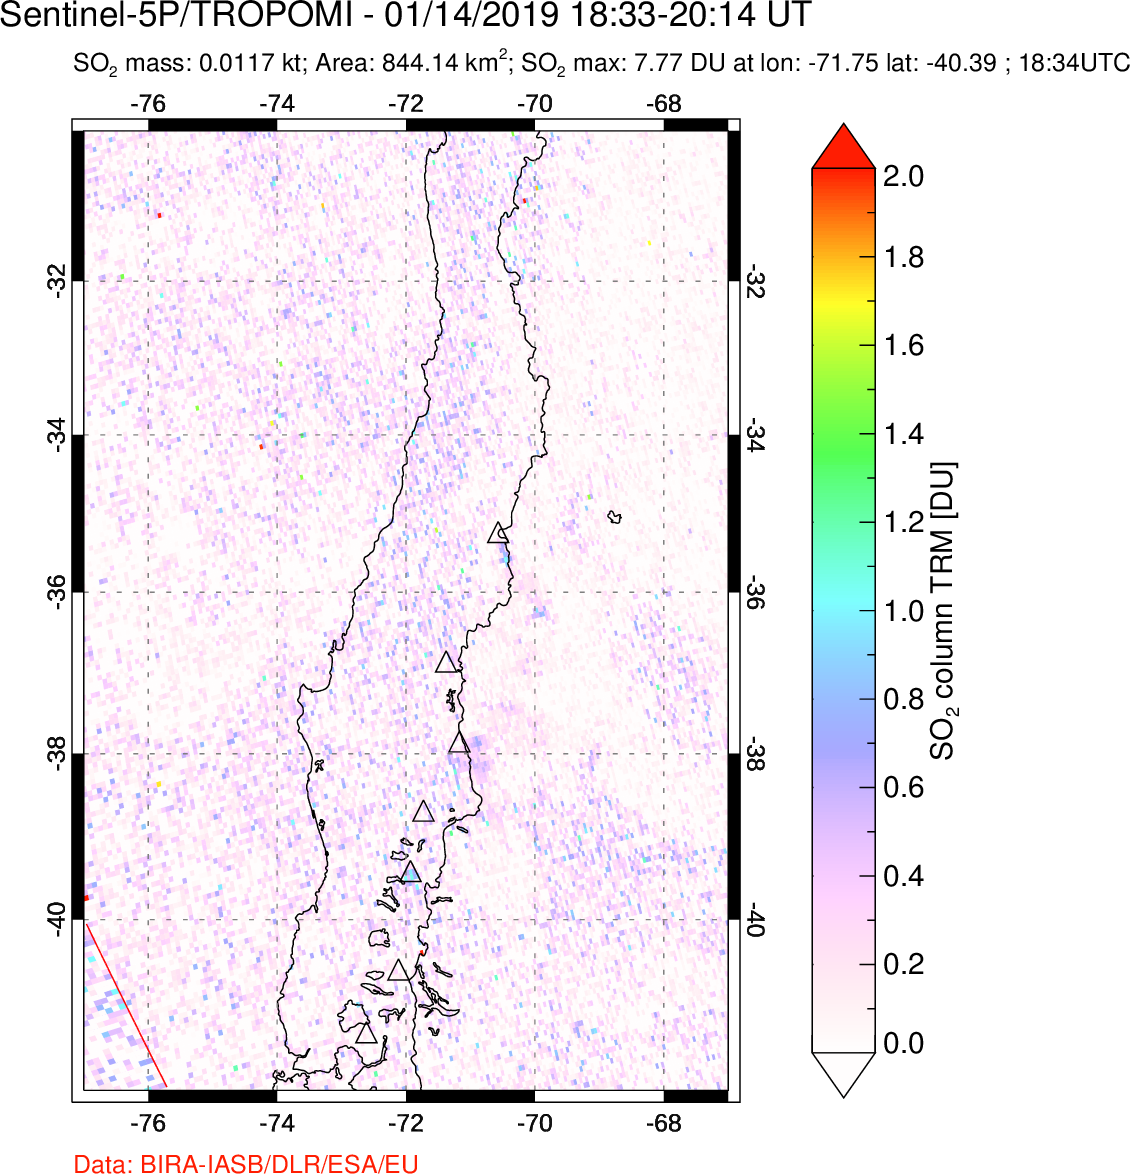 A sulfur dioxide image over Central Chile on Jan 14, 2019.